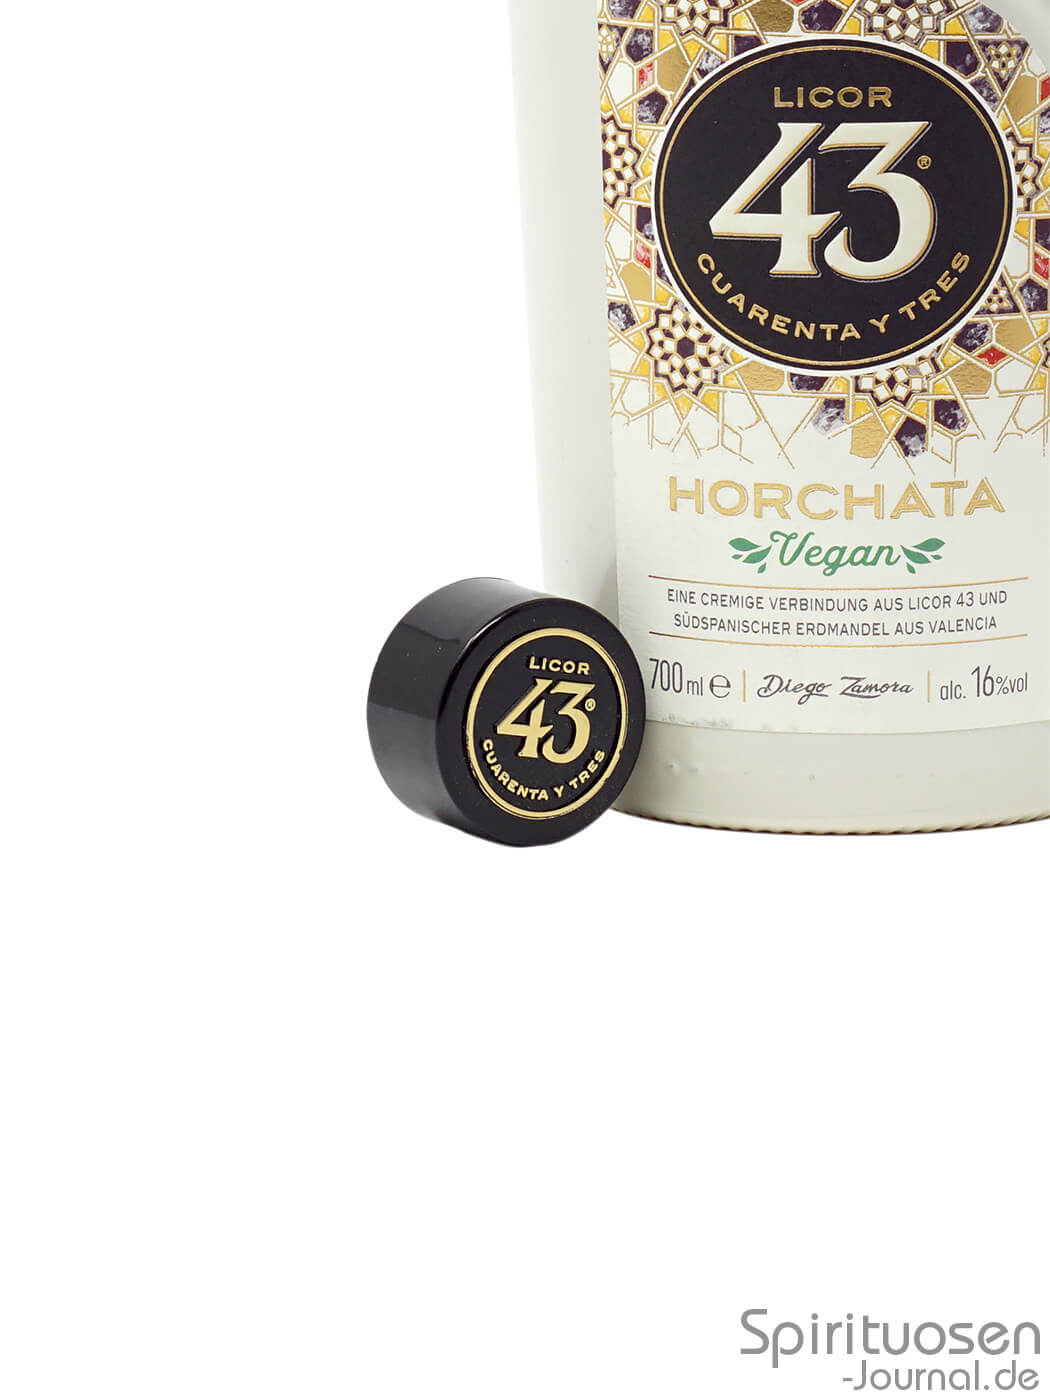 Licor 43 Horchata jedermann – für Test: Veganer im „Cremelikör“